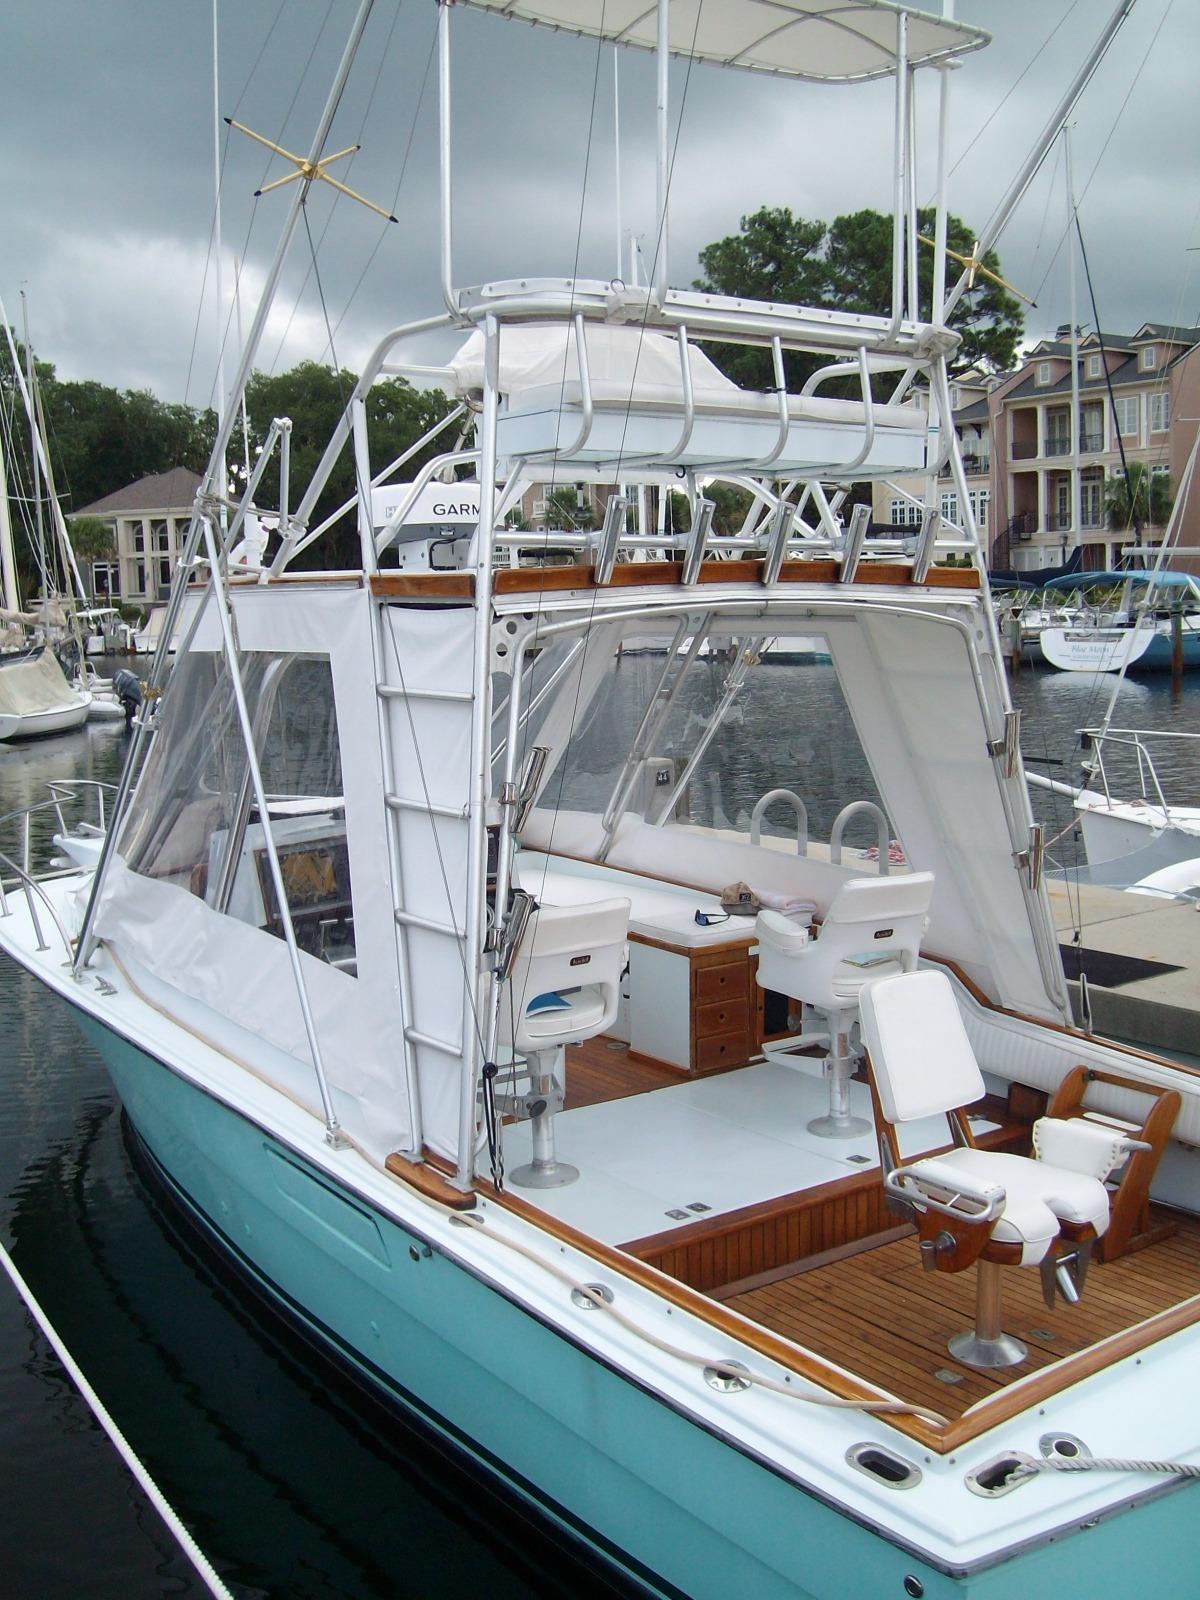 "Aronow" Boat listings